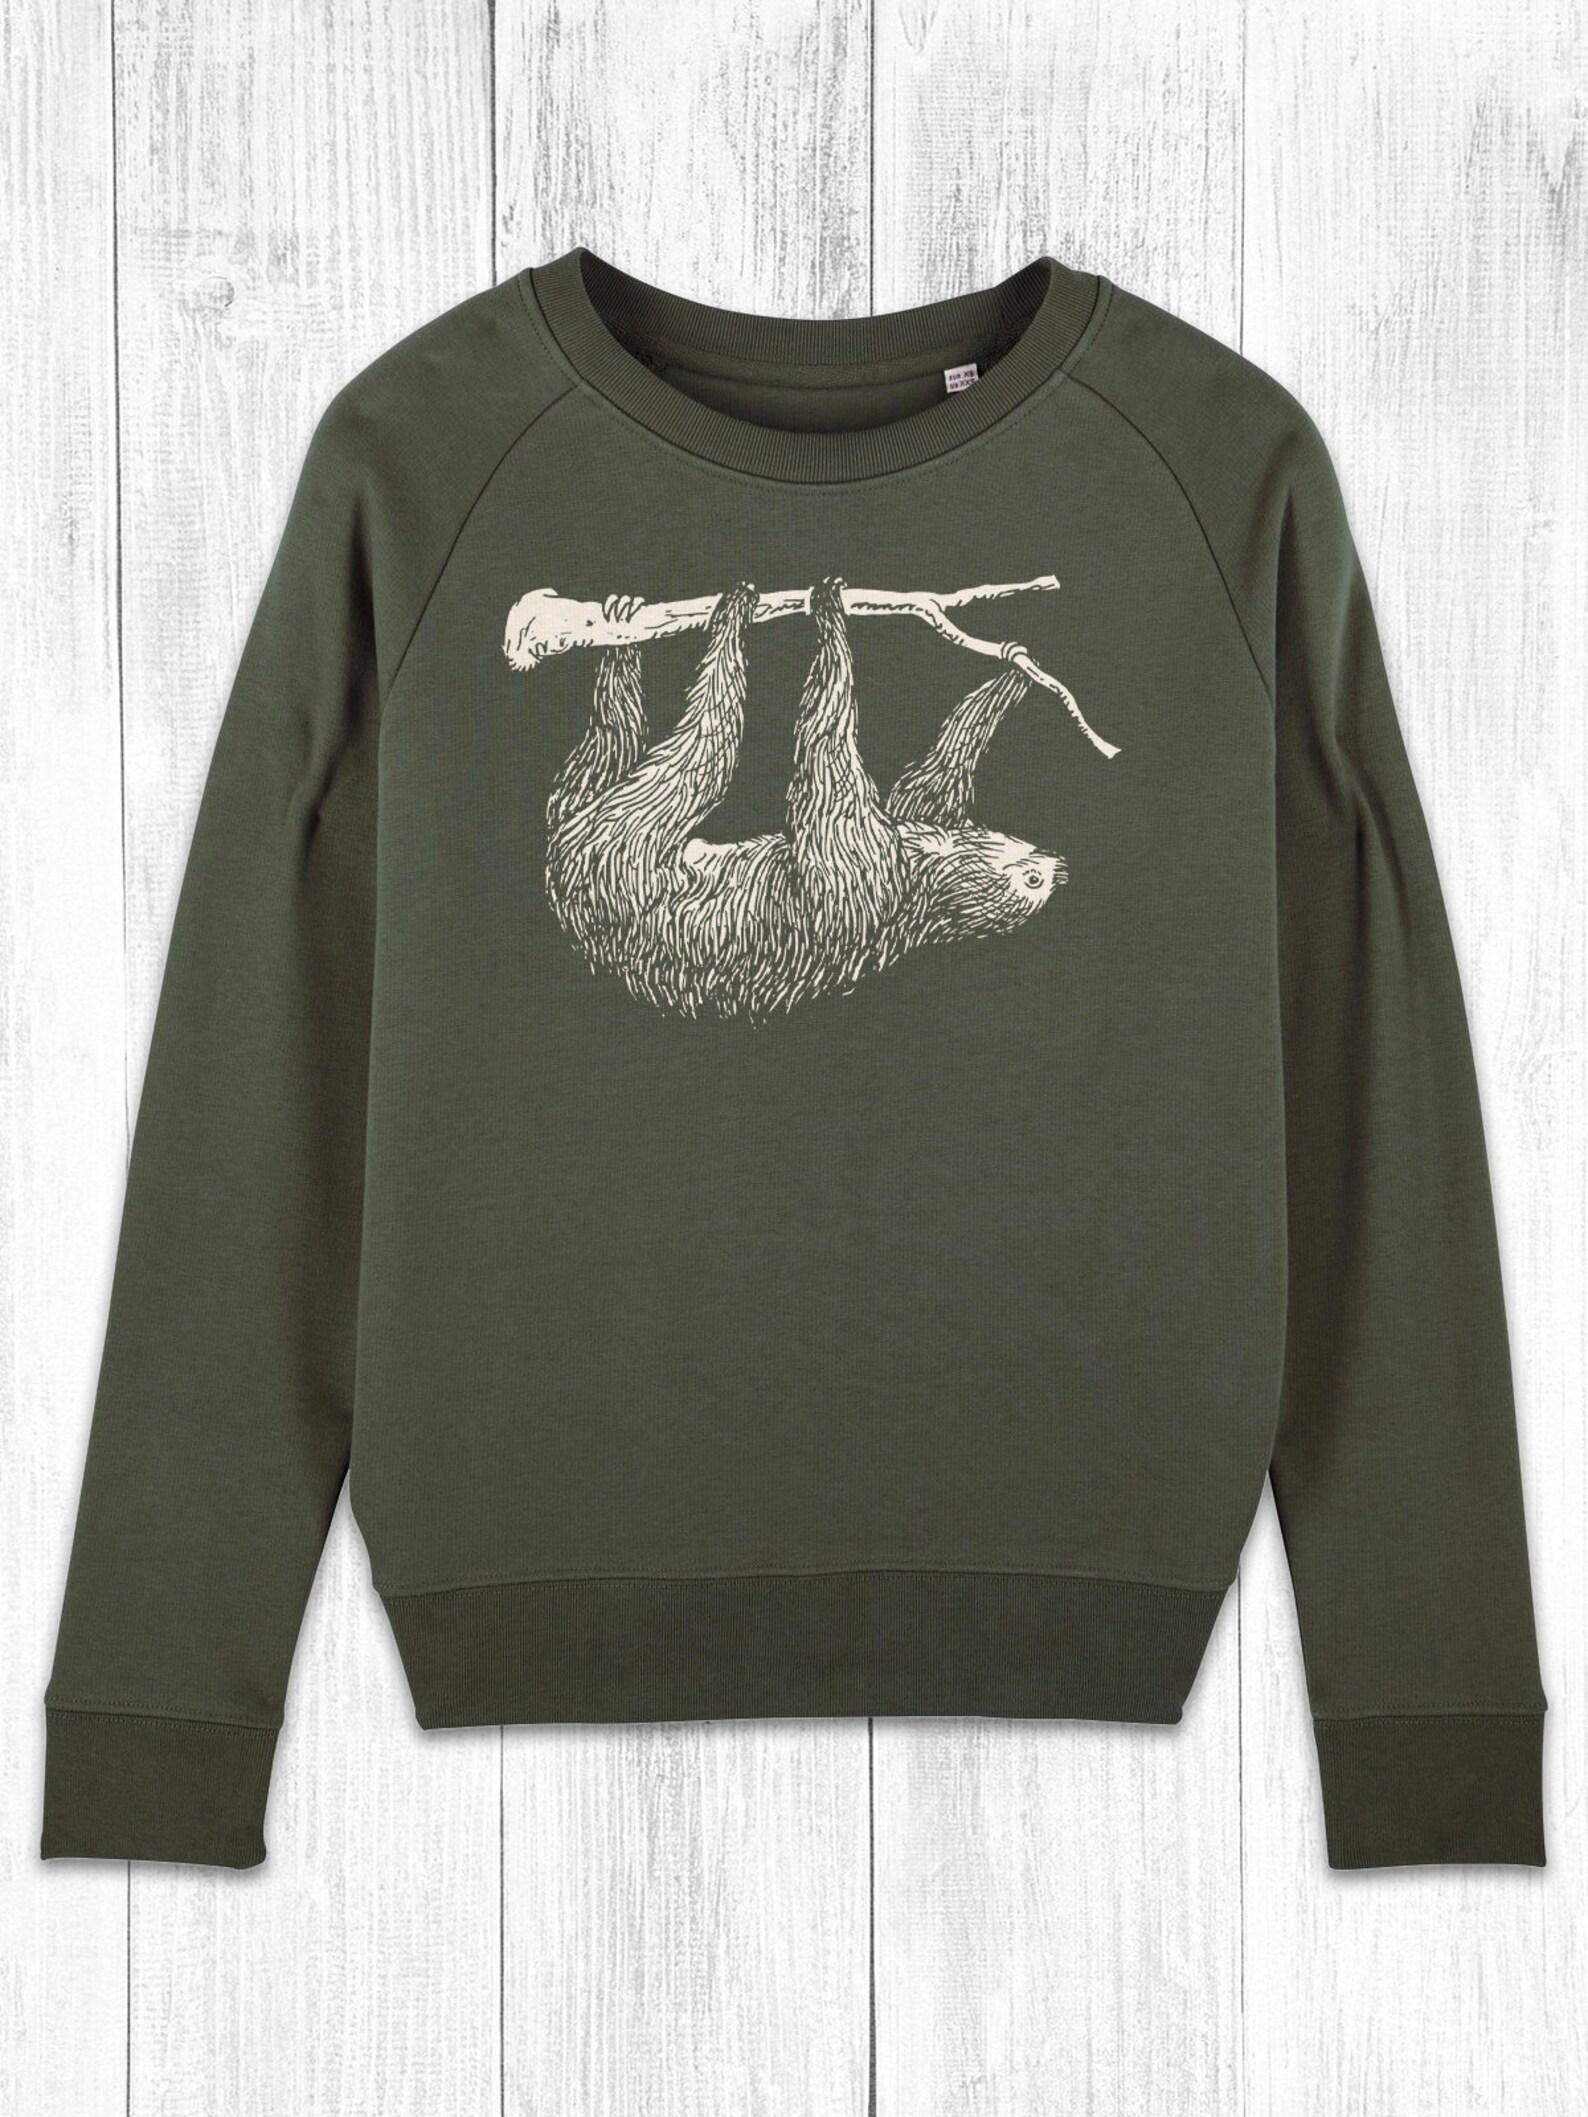 Sloth Women's Sweatshirt Sloth Sweatshirt Cute | Etsy